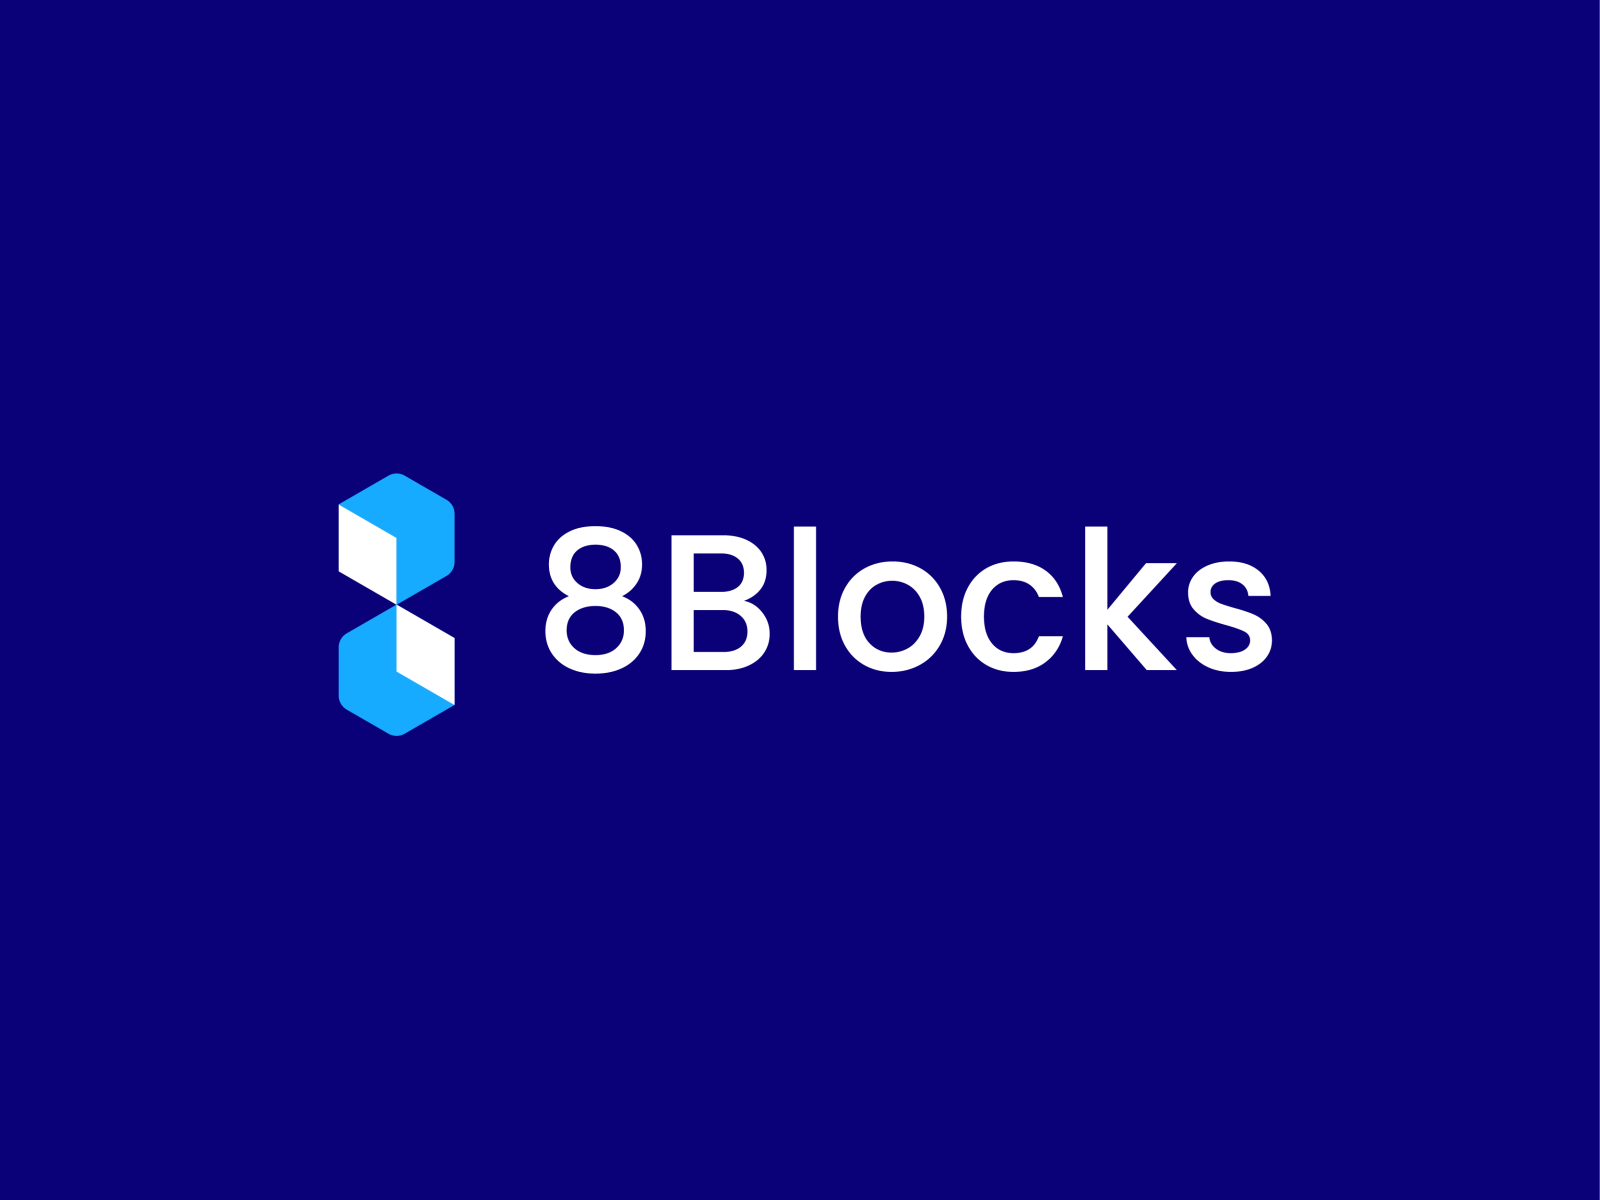 8Blocks - 2nd concept by Badr errouichaq on Dribbble